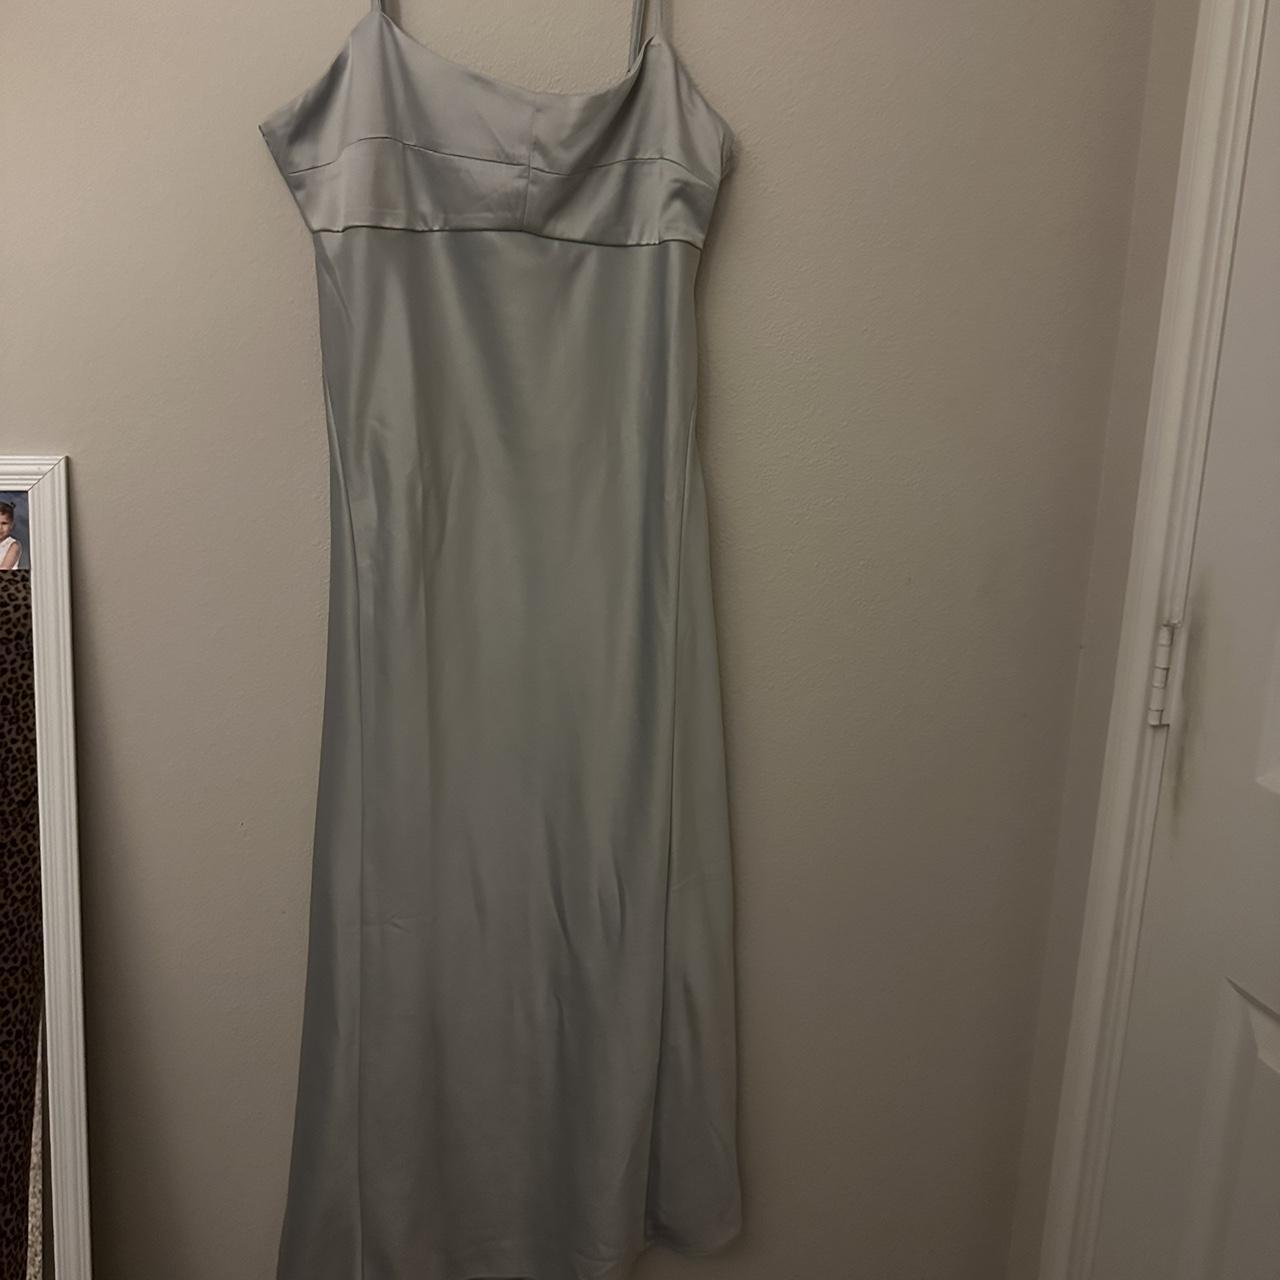 H&M silvery grey satin silk dress 👗 •zipper on... - Depop